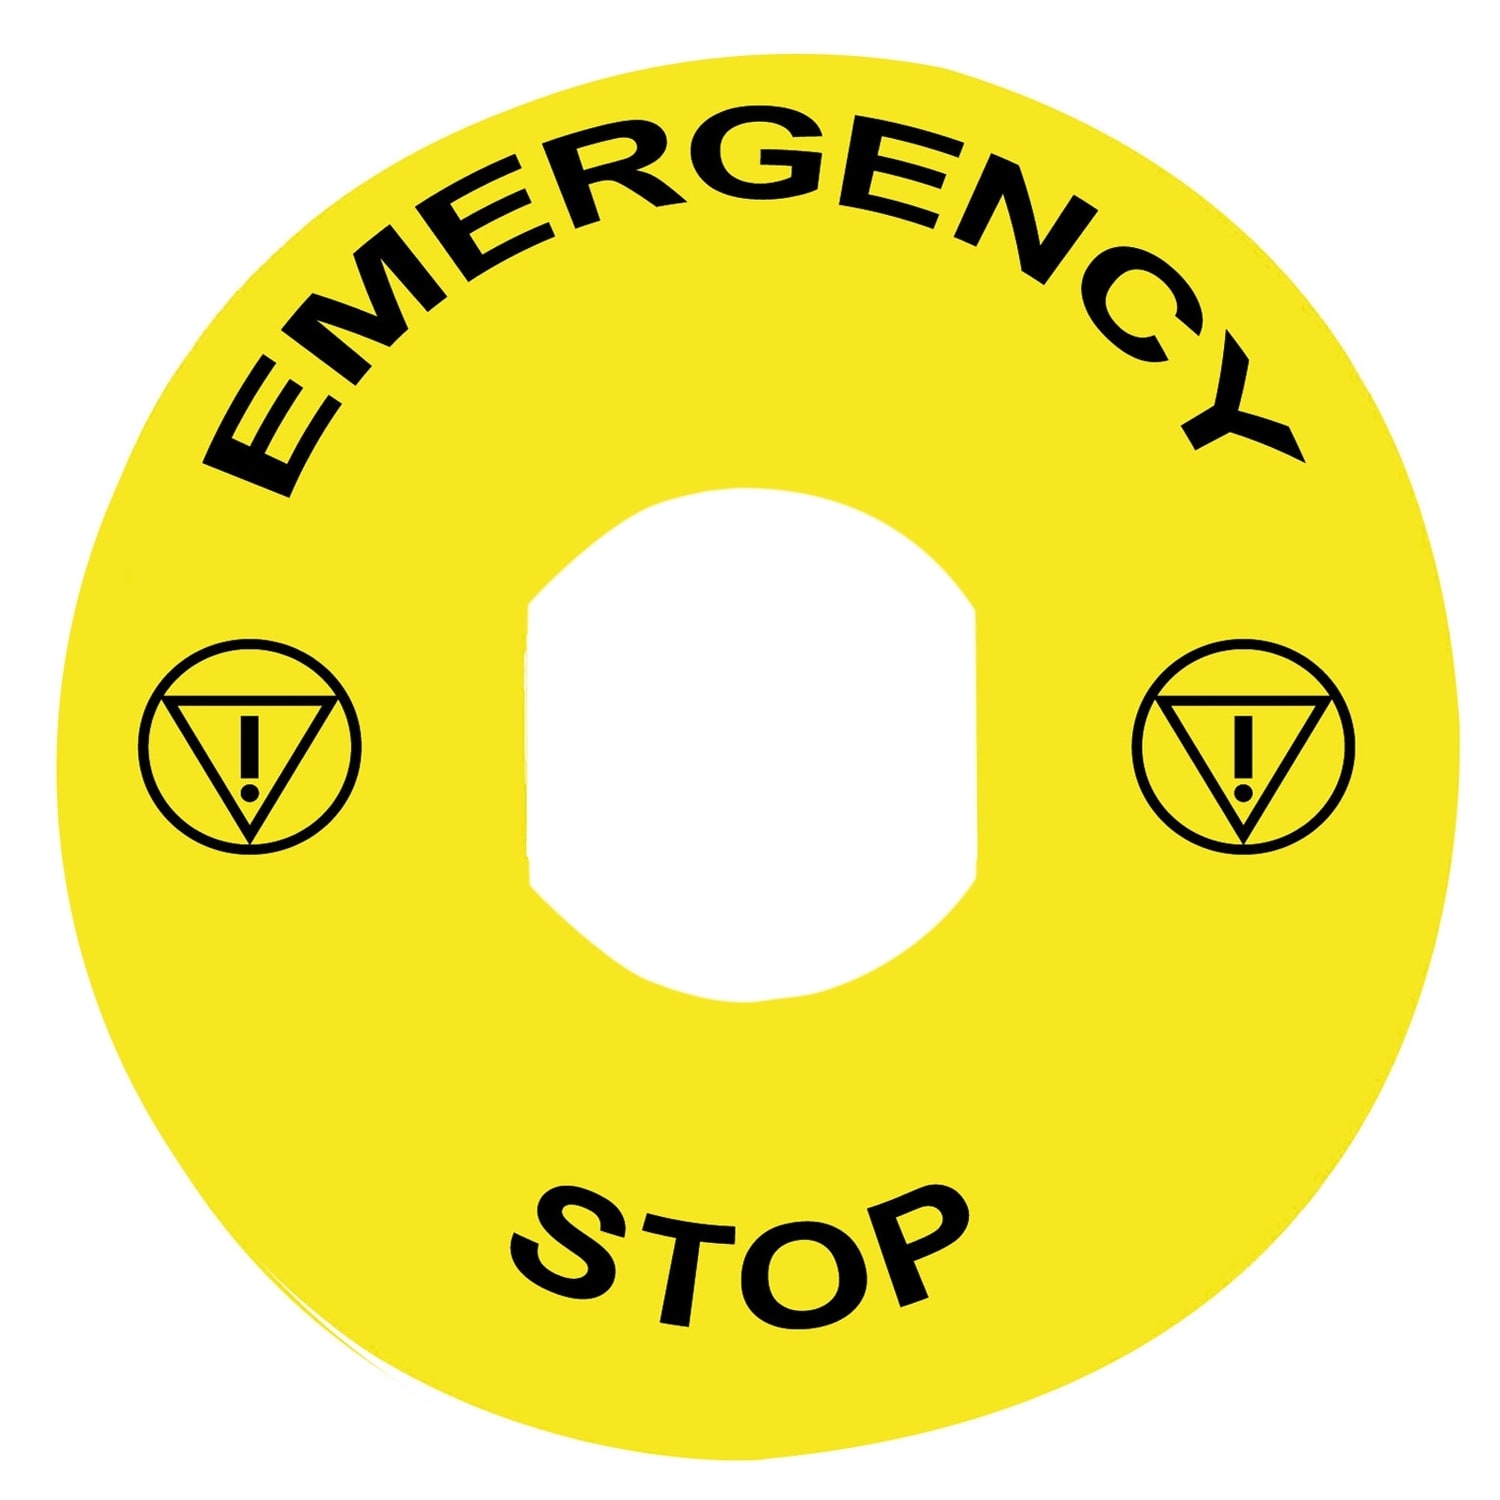 Schneider Electric - Harmony etiquette circulaire D90mm jaune - logo EN13850 - EMERGENCY STOP